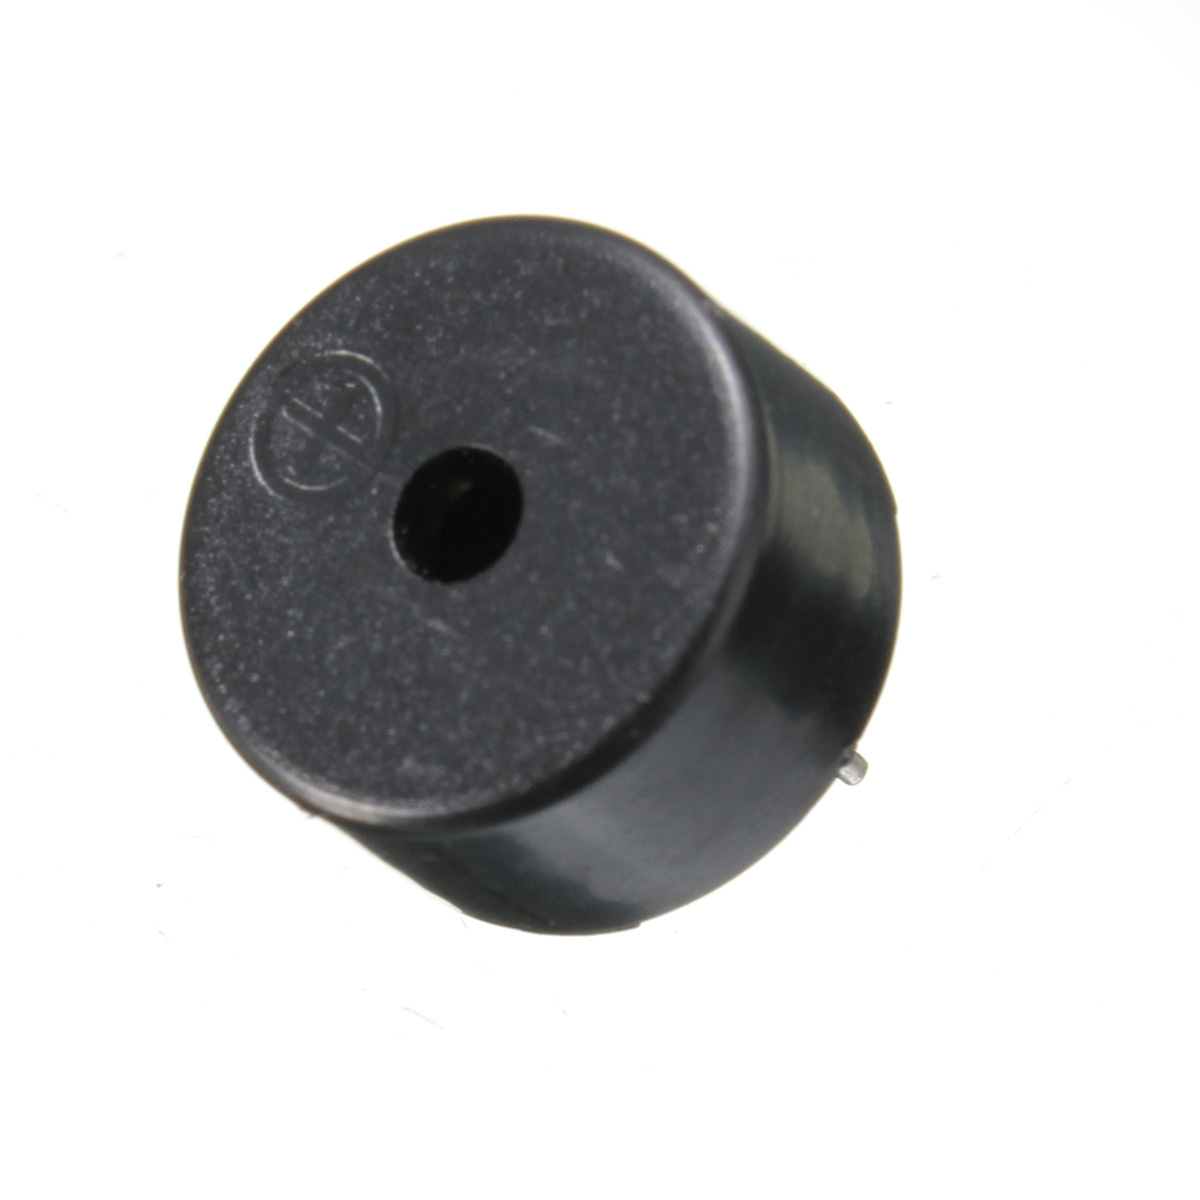 2017 Hot Sale Black Plastic 14 x 7mm 2 Pins Passive Piezo Buzzer AC1-3V Piezo Transducer with Flying Lead Acoustic Components